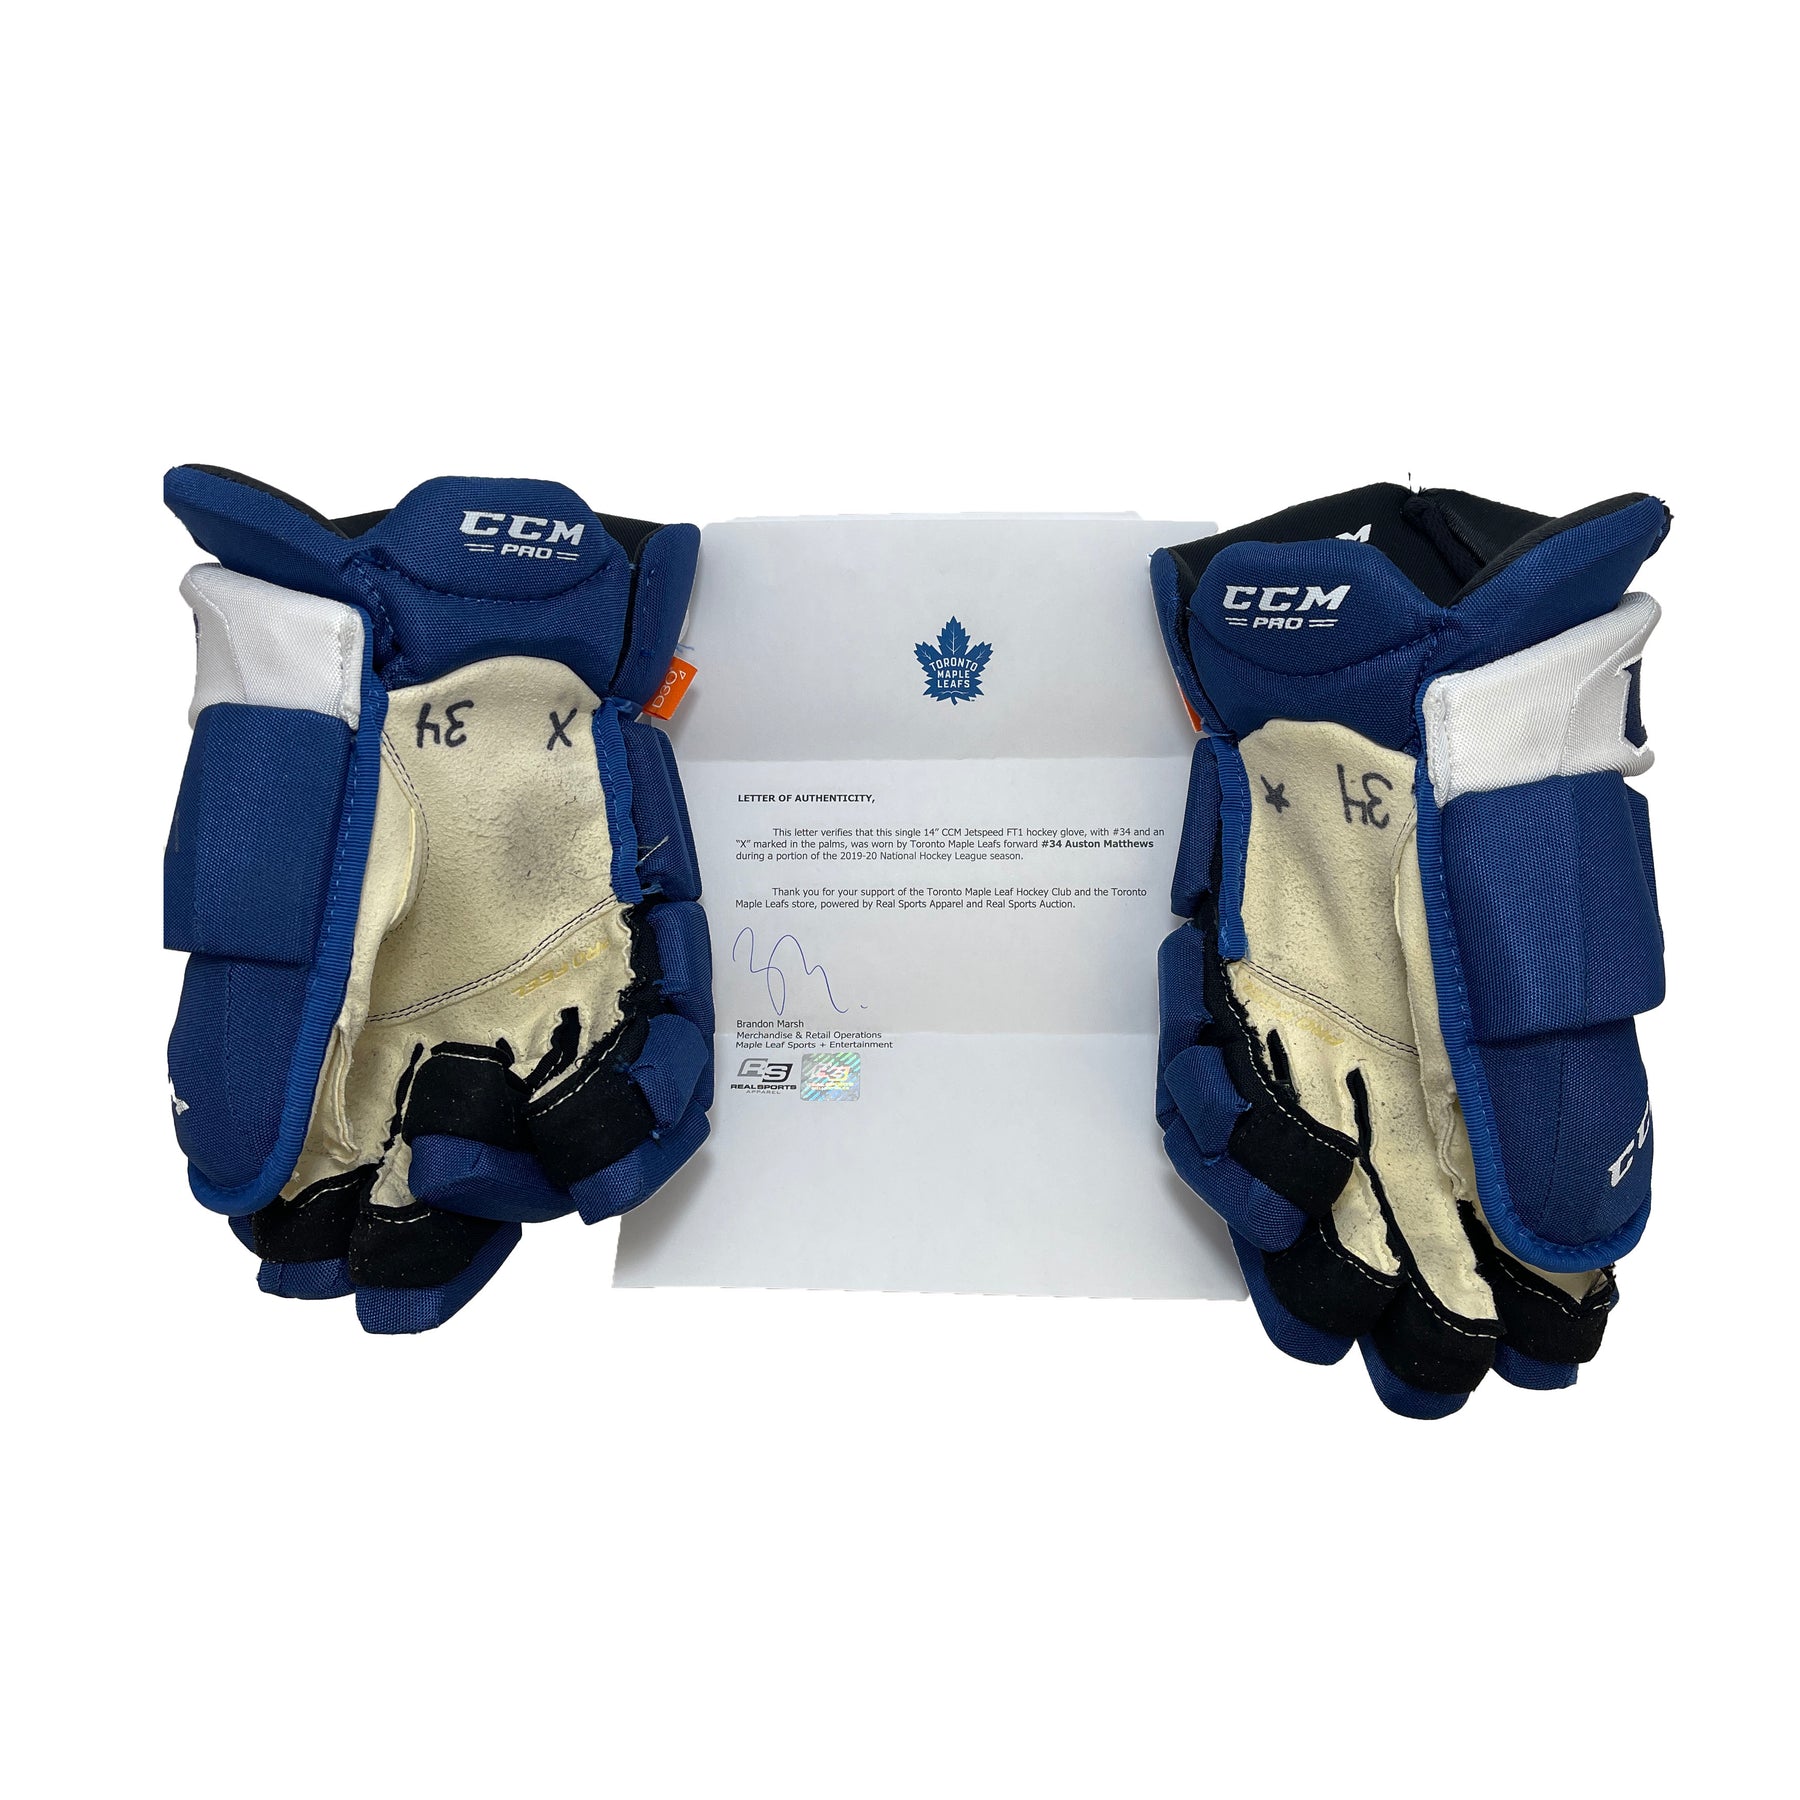 Toronto Maple Leafs Auston Matthews 2019-20 Game Used Gloves